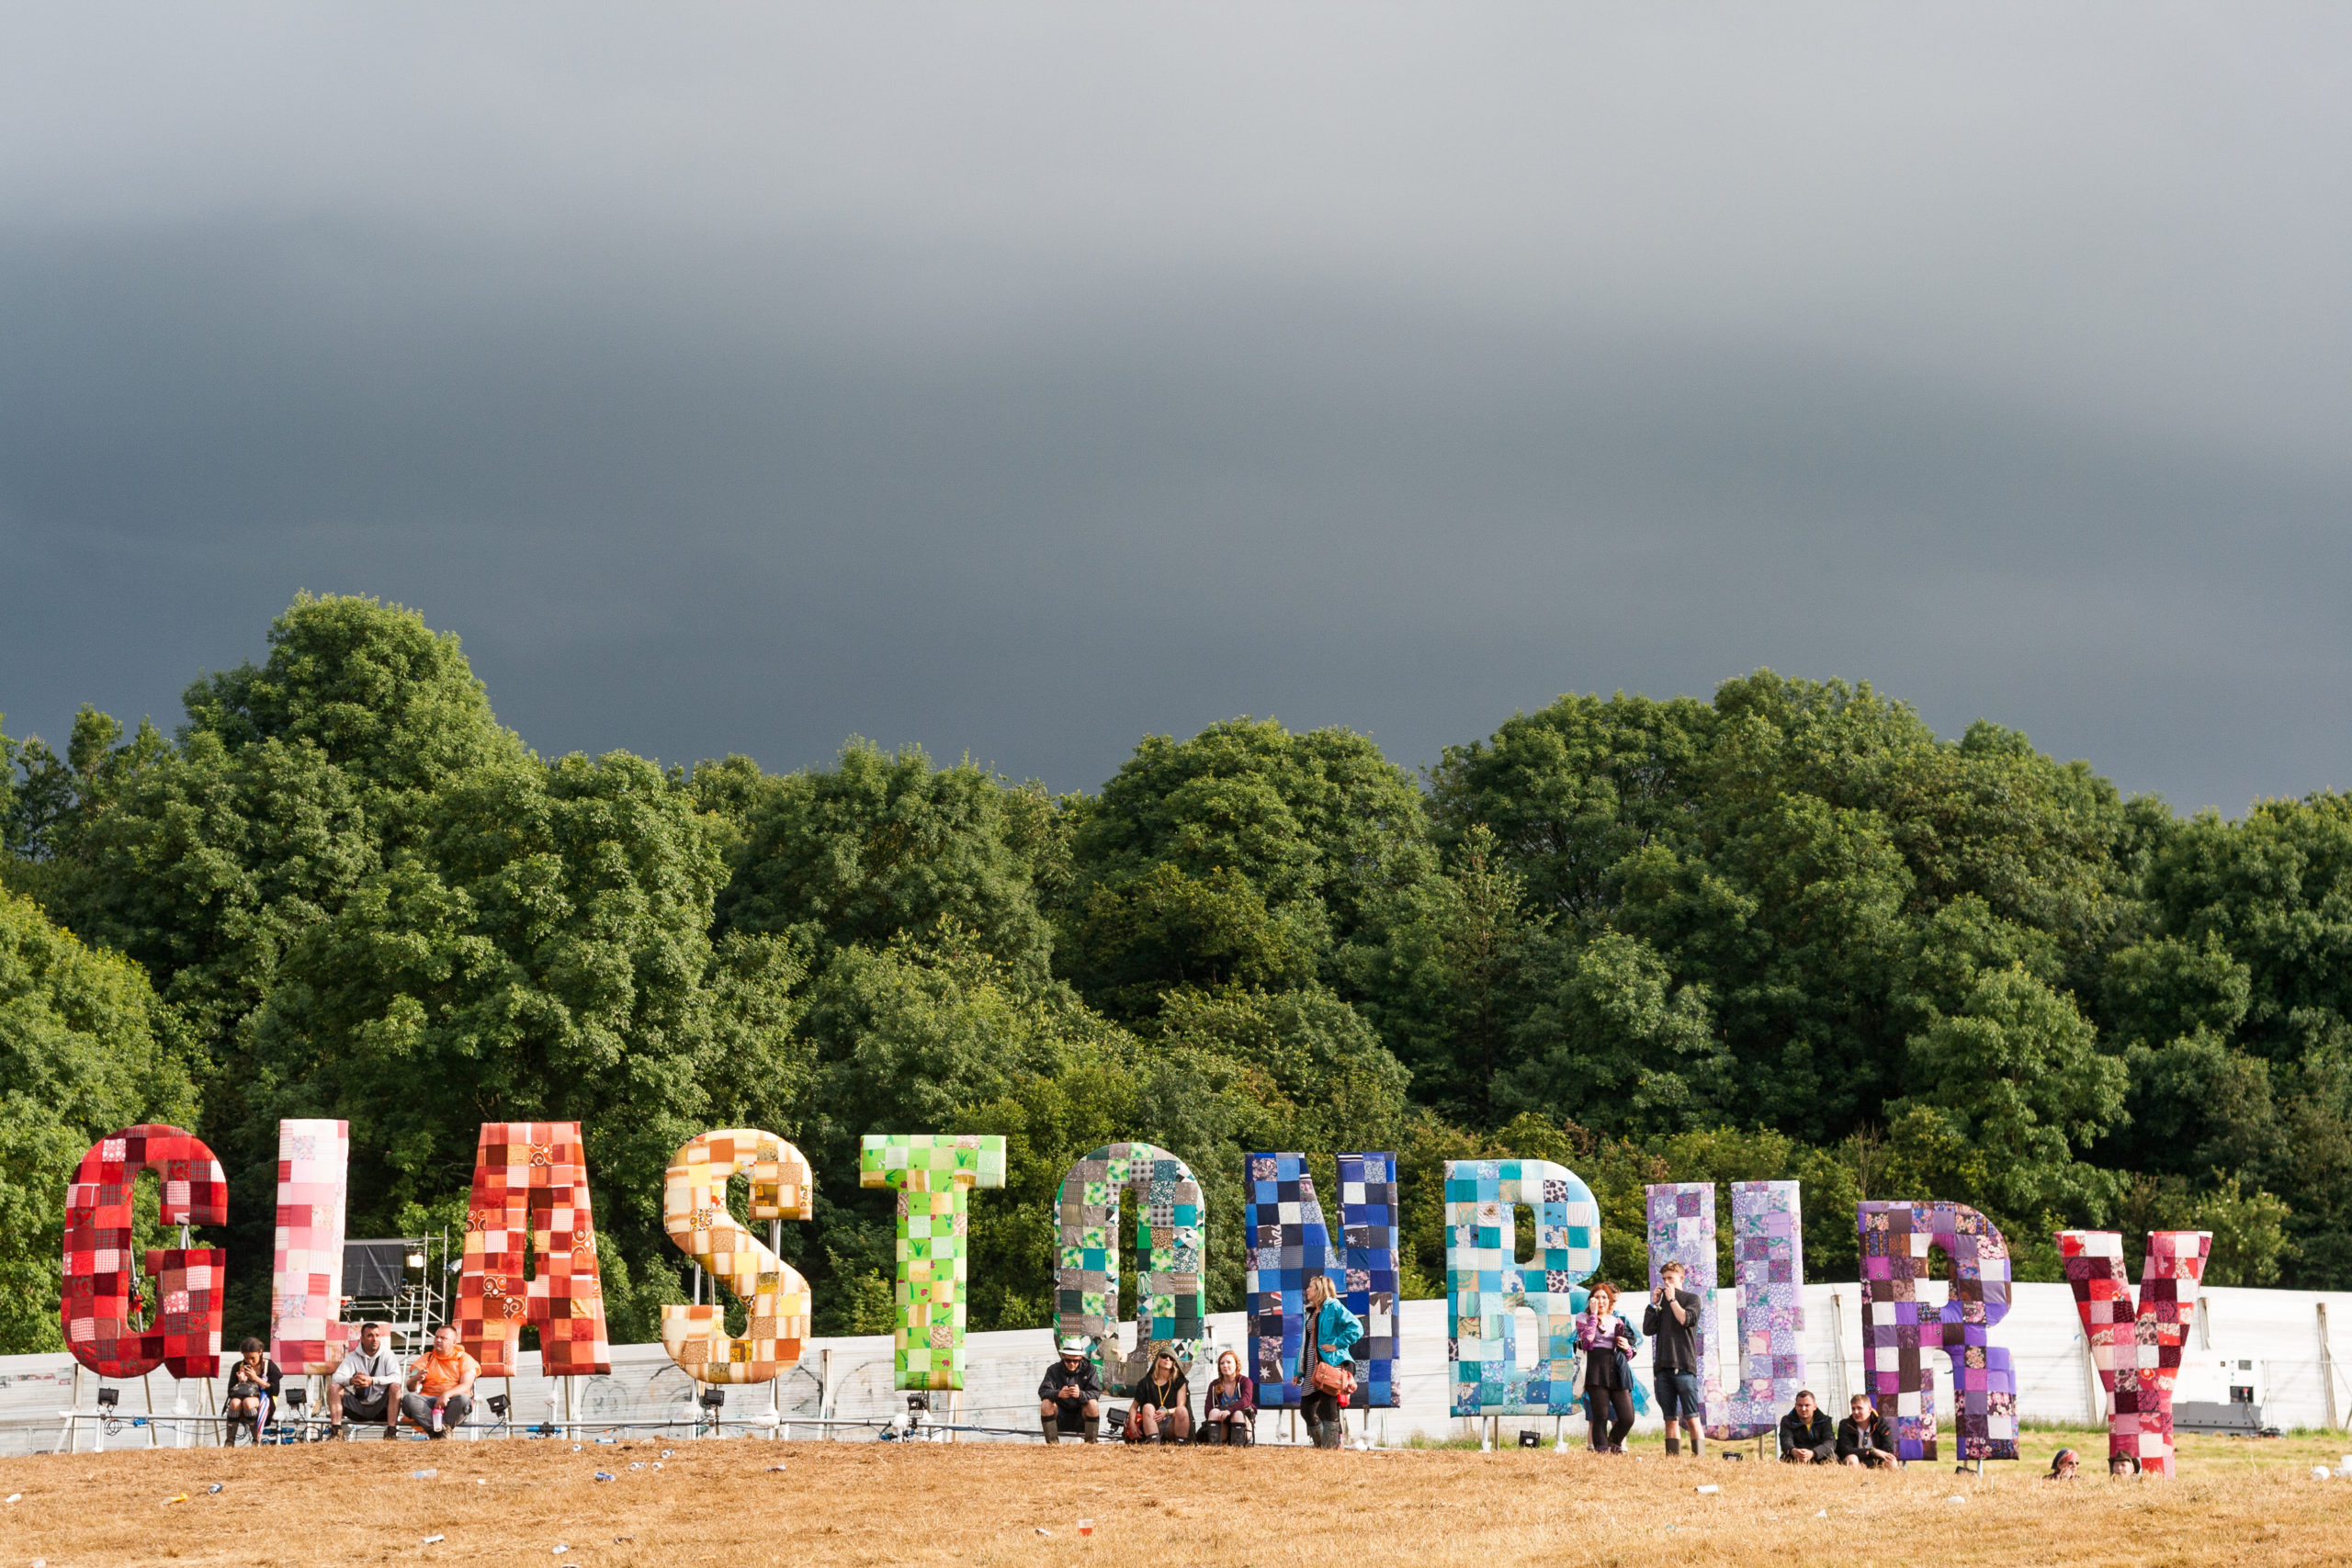 Glastonbury and its vivid presence